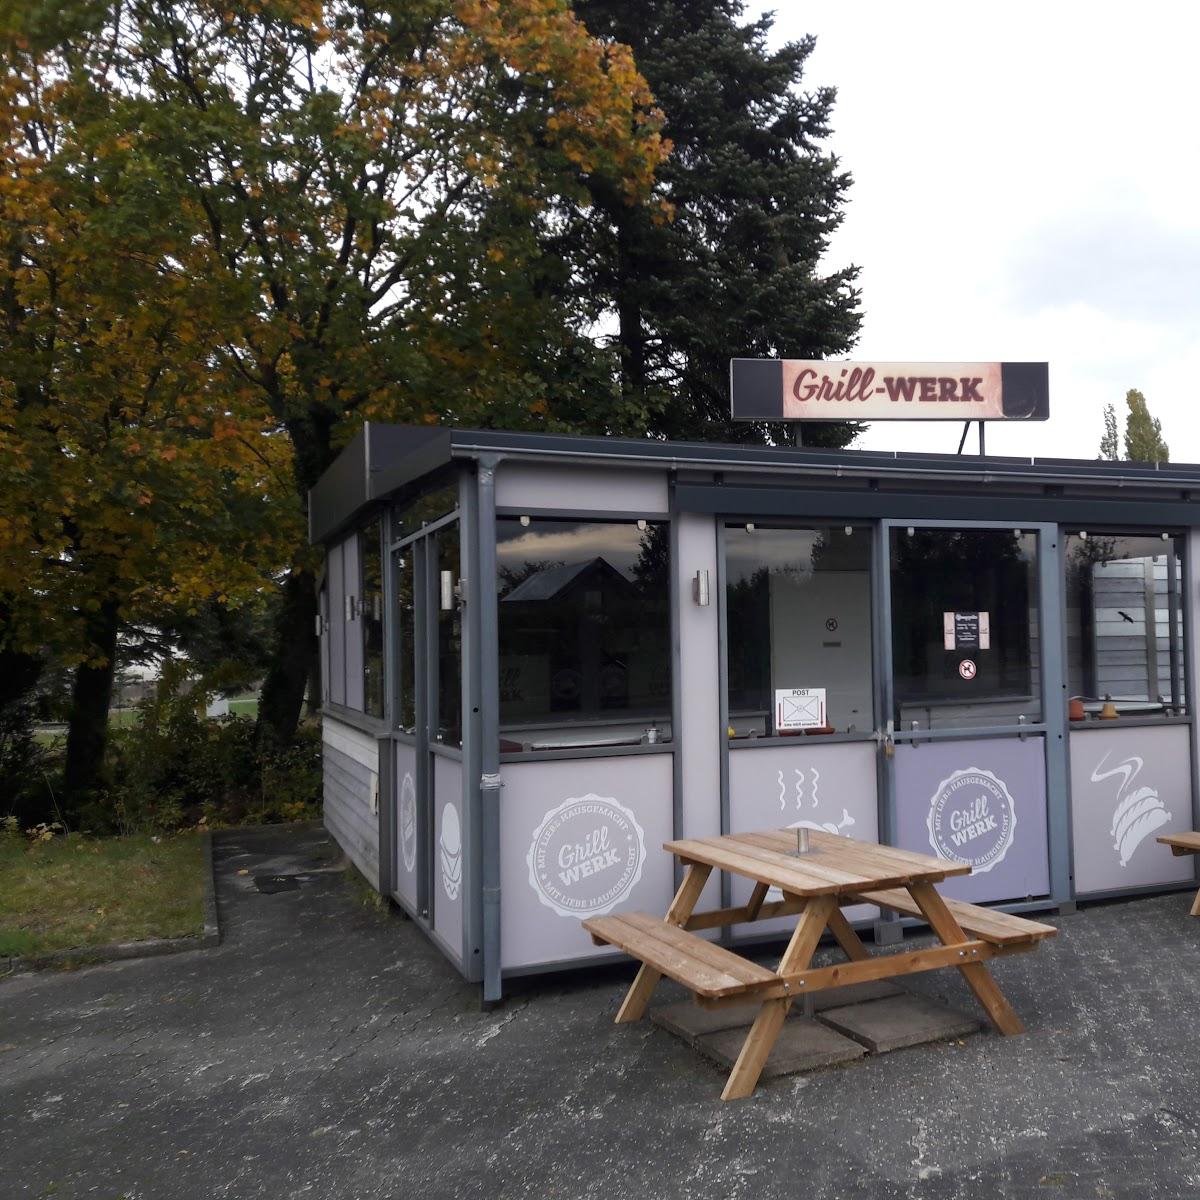 Restaurant "Grillwerk" in Horn-Bad Meinberg